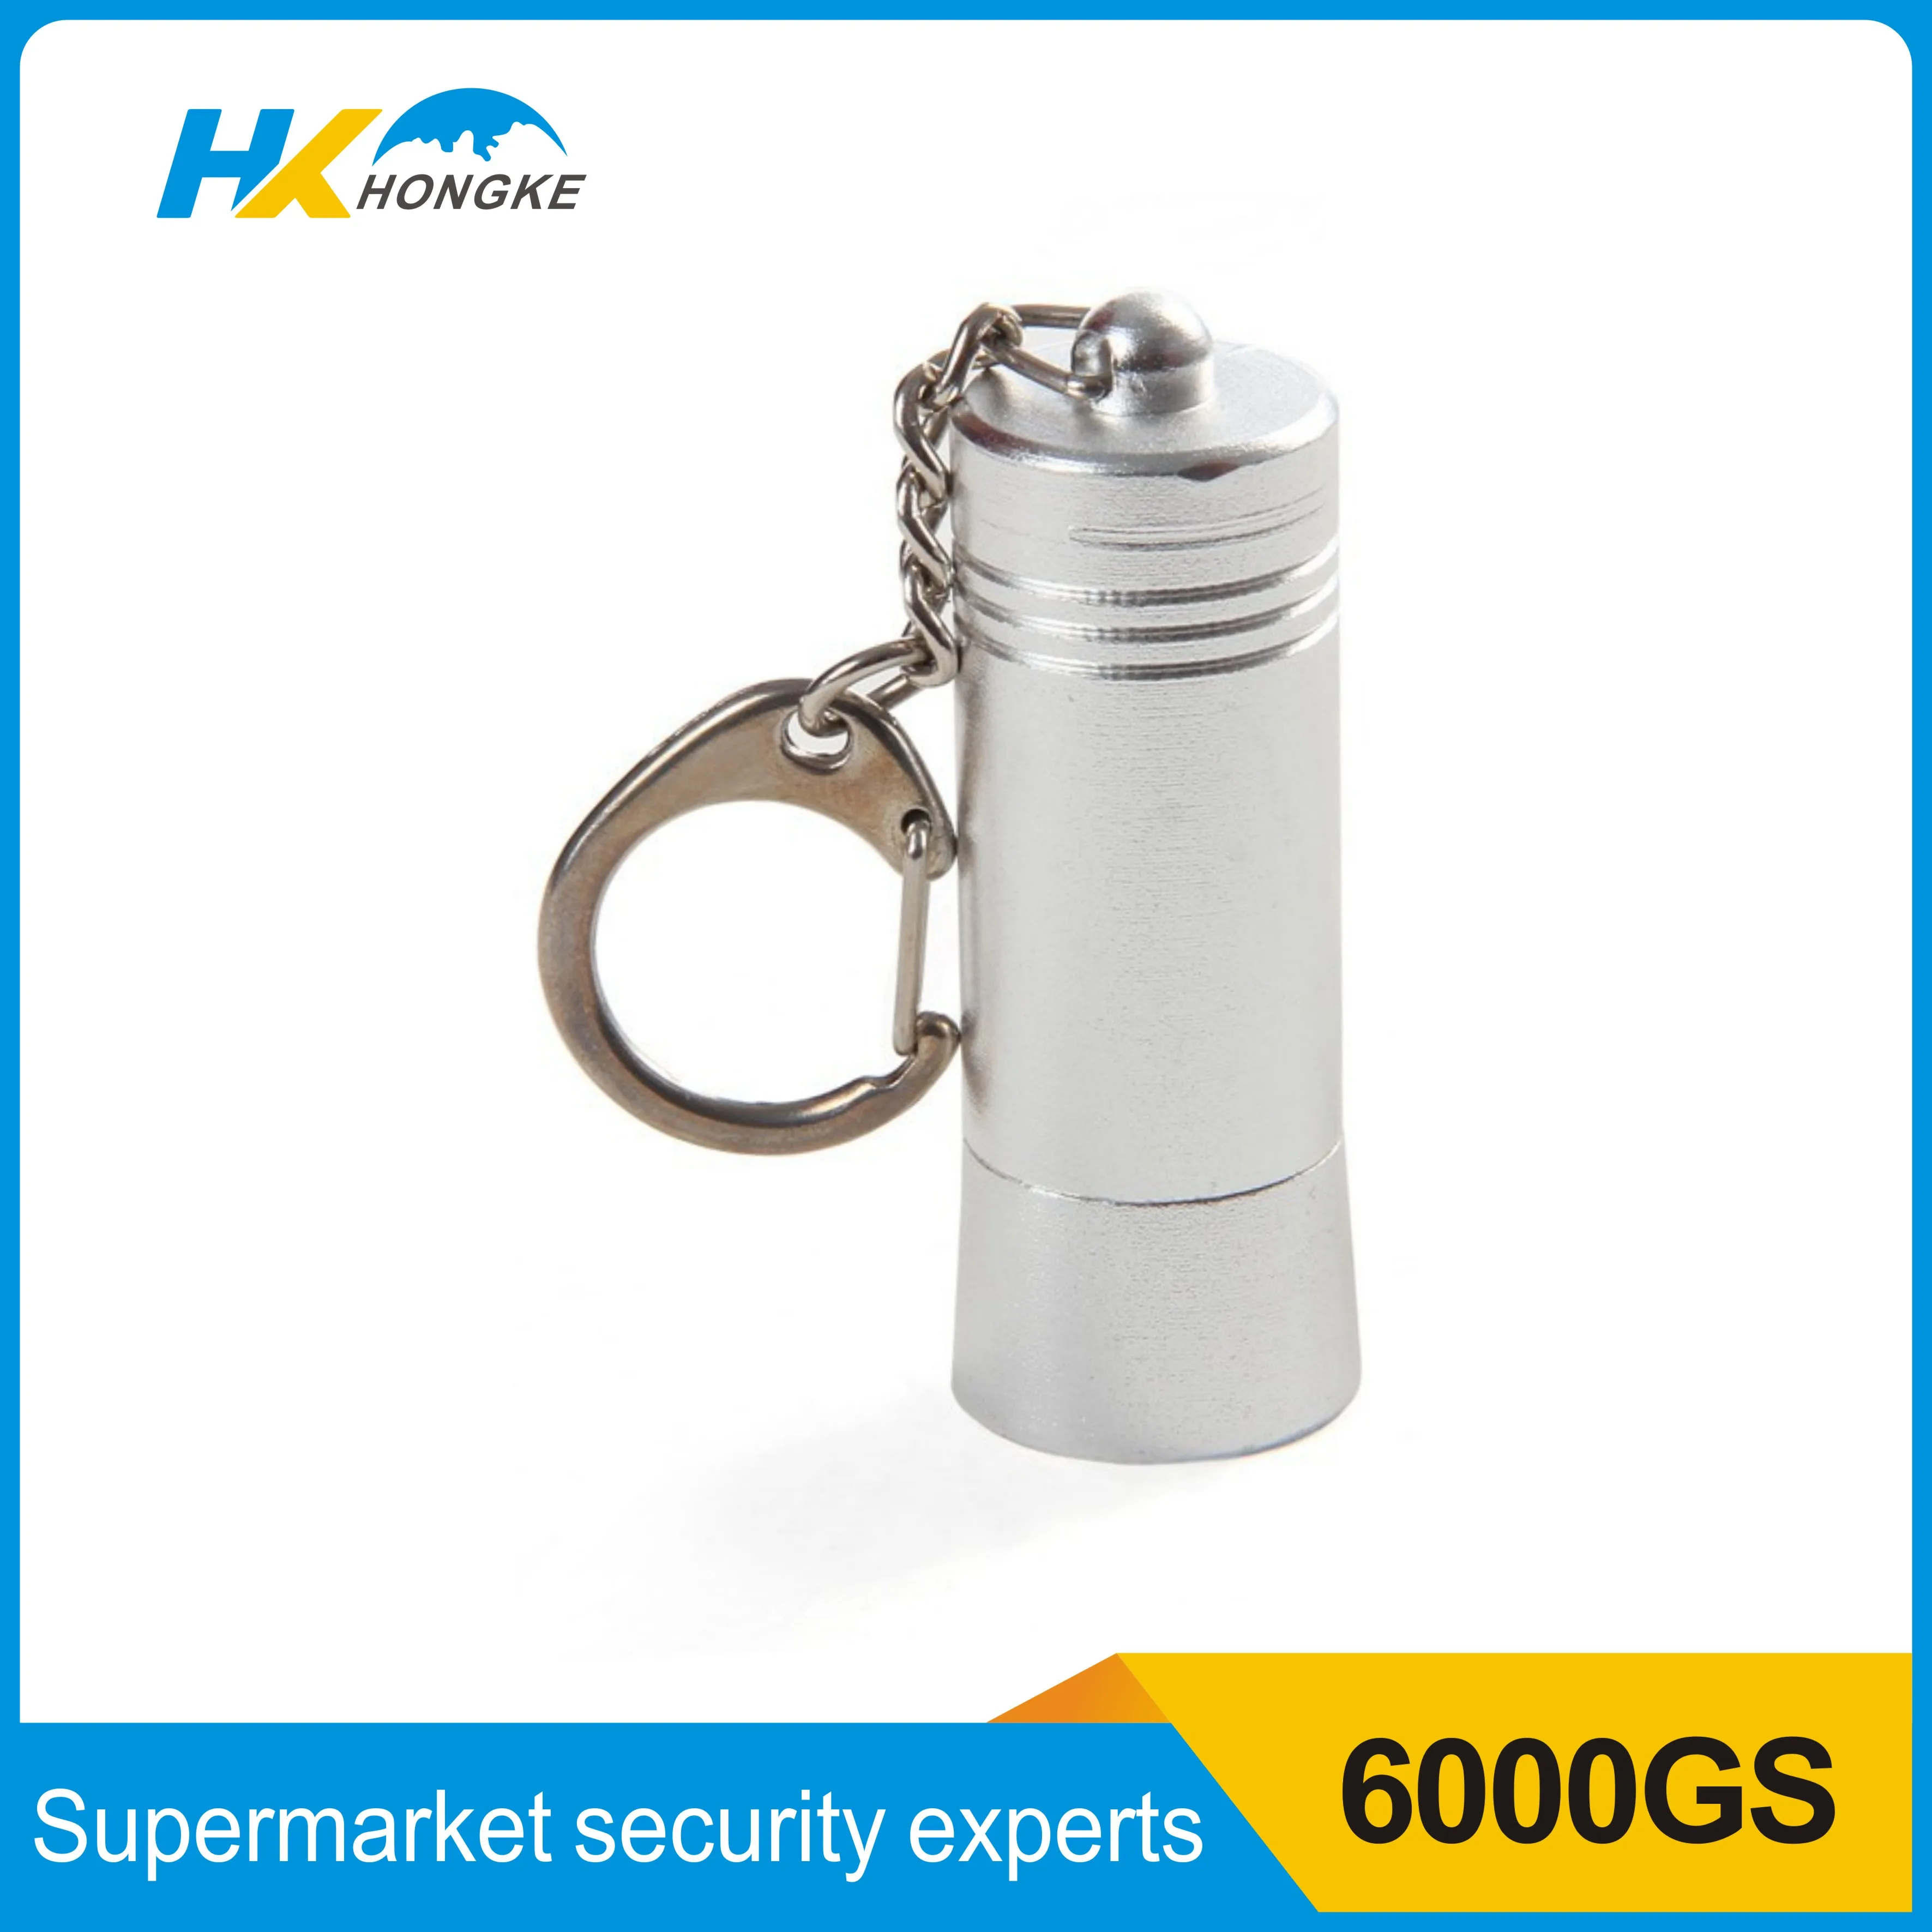 

6000GS Eas Security Tag Remover Portable Mini Magnet Magnetic Bullet Anti-theft Lockpick Detacher Key Detagger Protection System